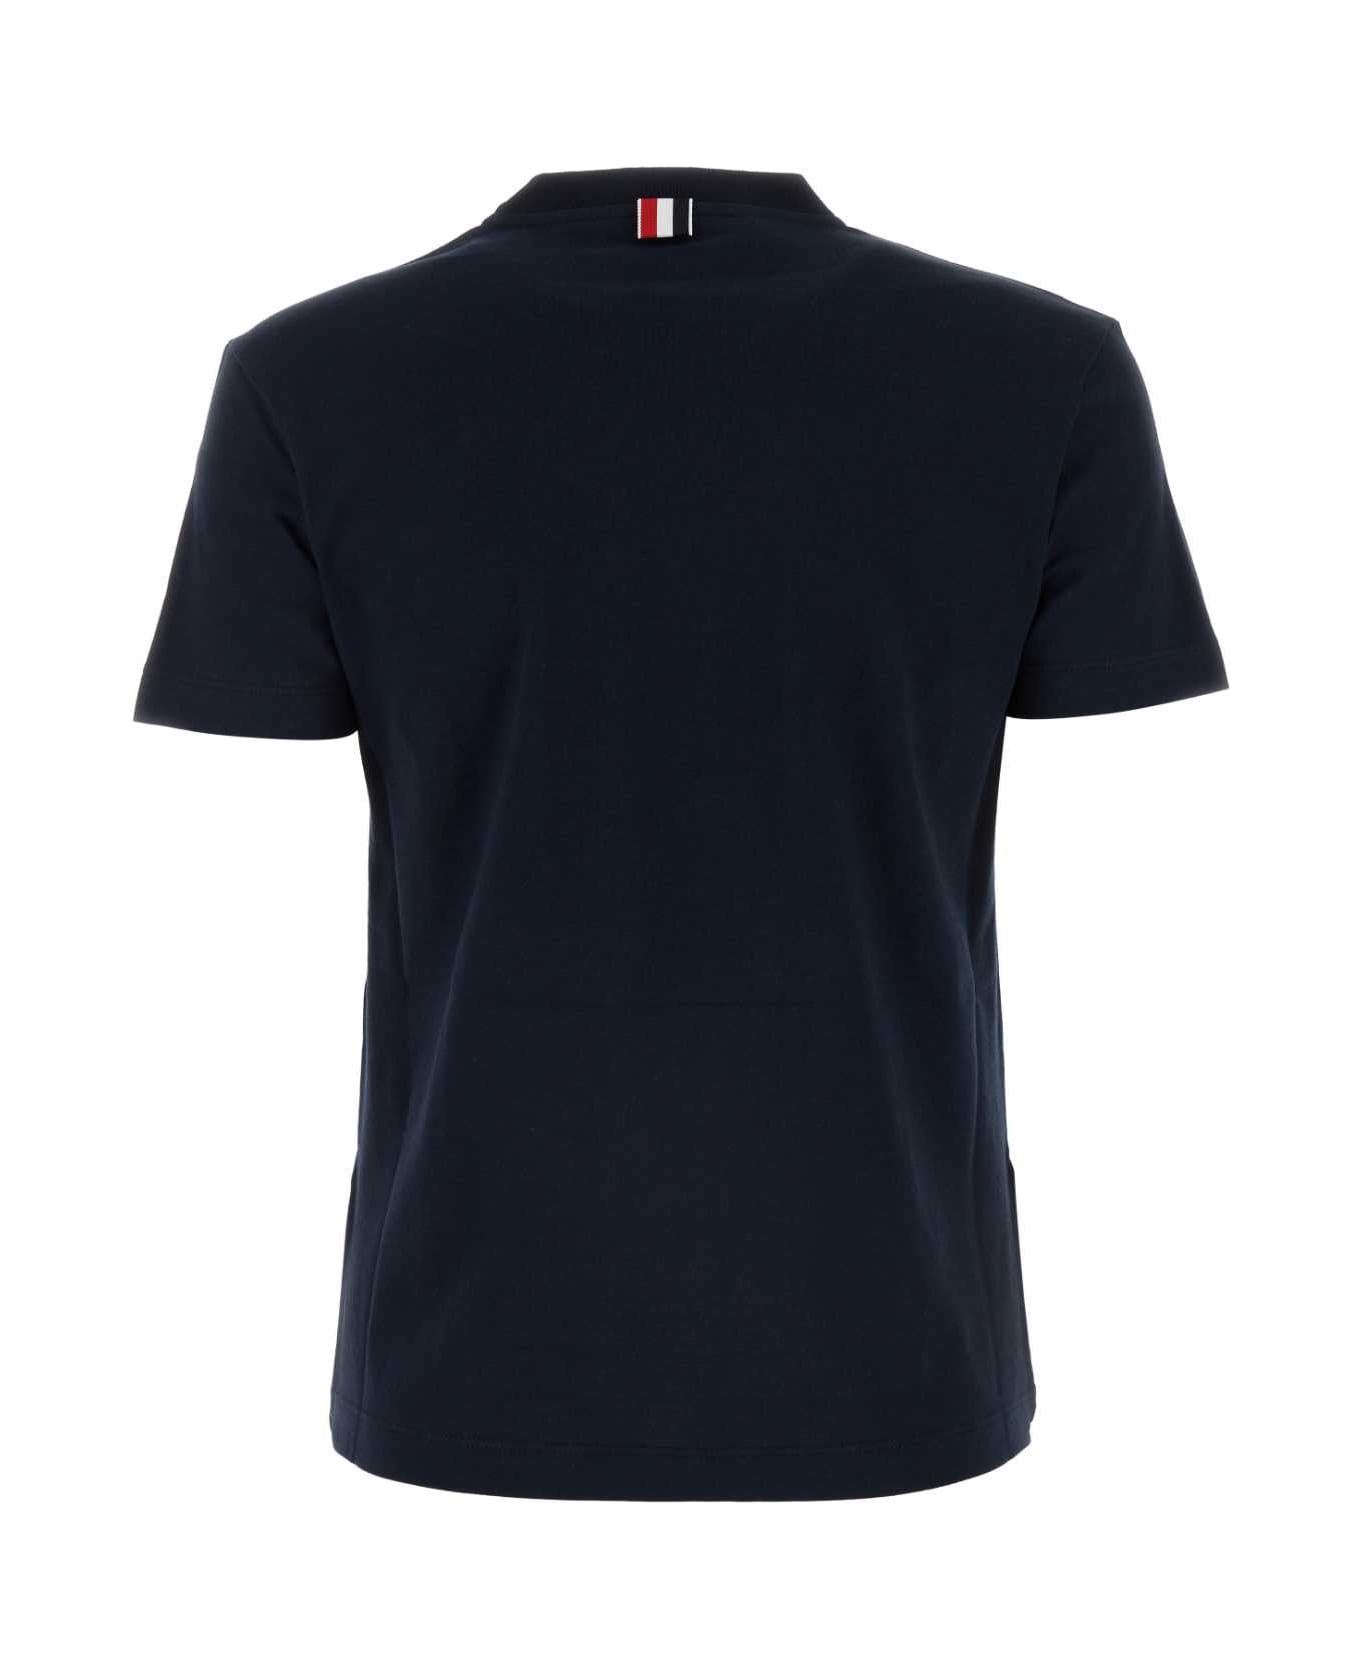 Thom Browne Navy Blue Cotton T-shirt - NAVY